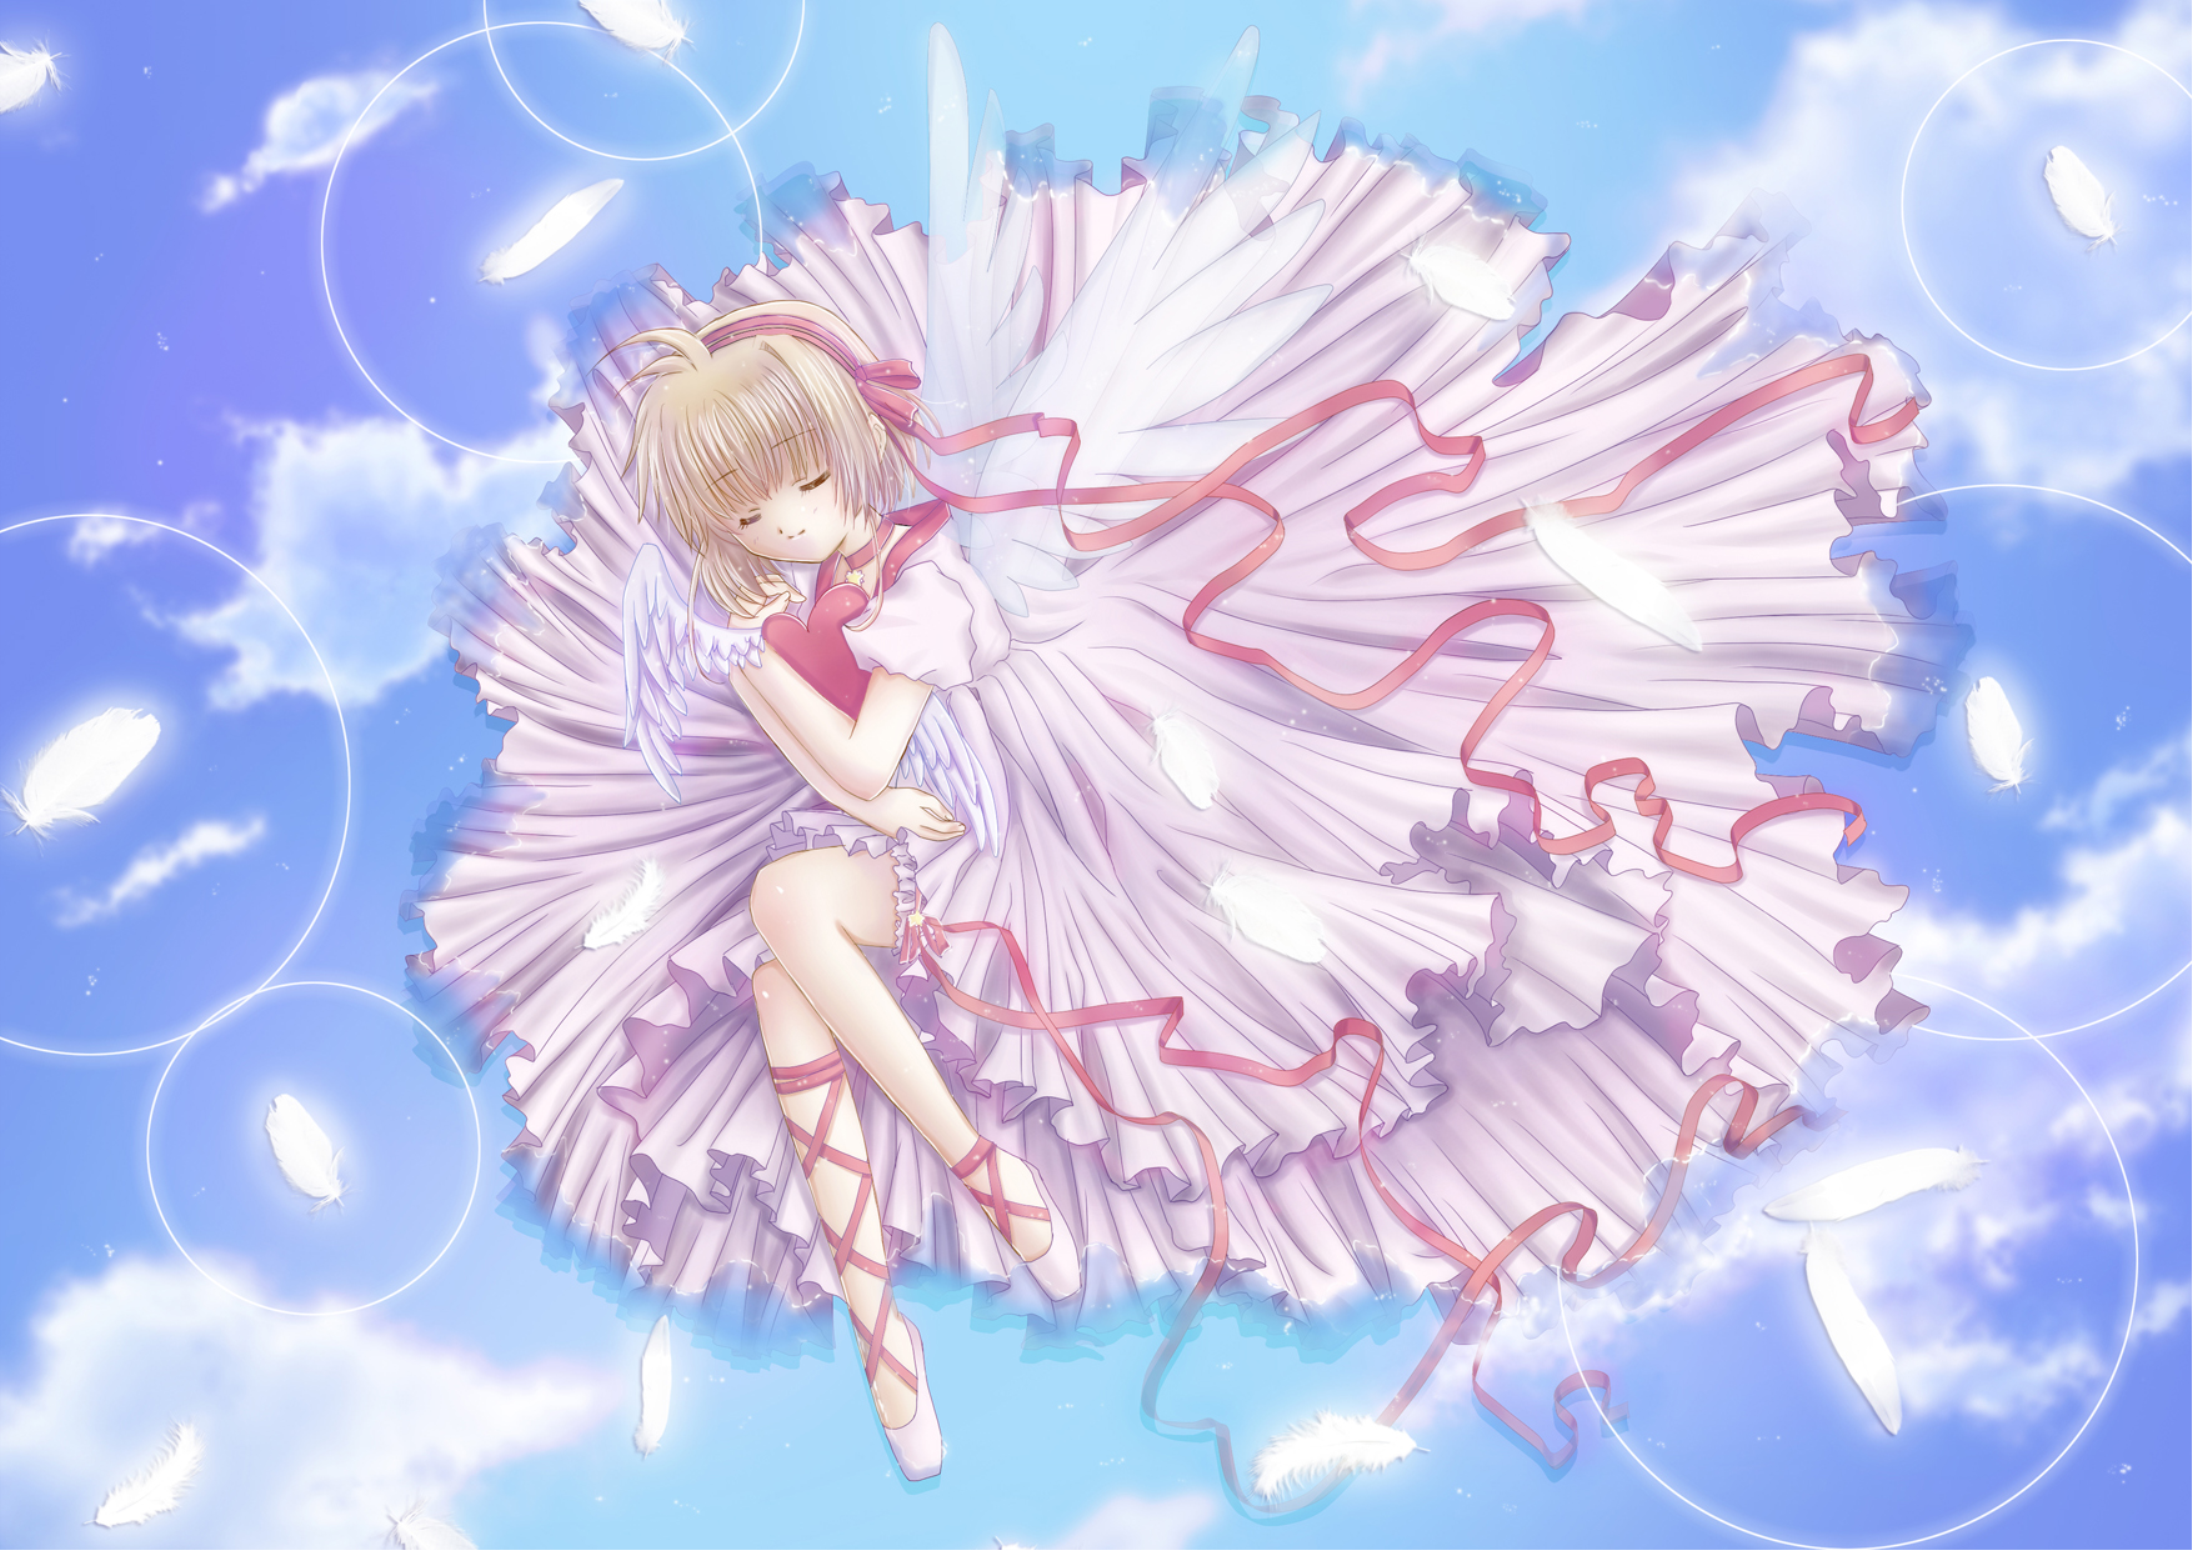 Anime Cardcaptor Sakura HD Wallpaper by オレンジちゃん